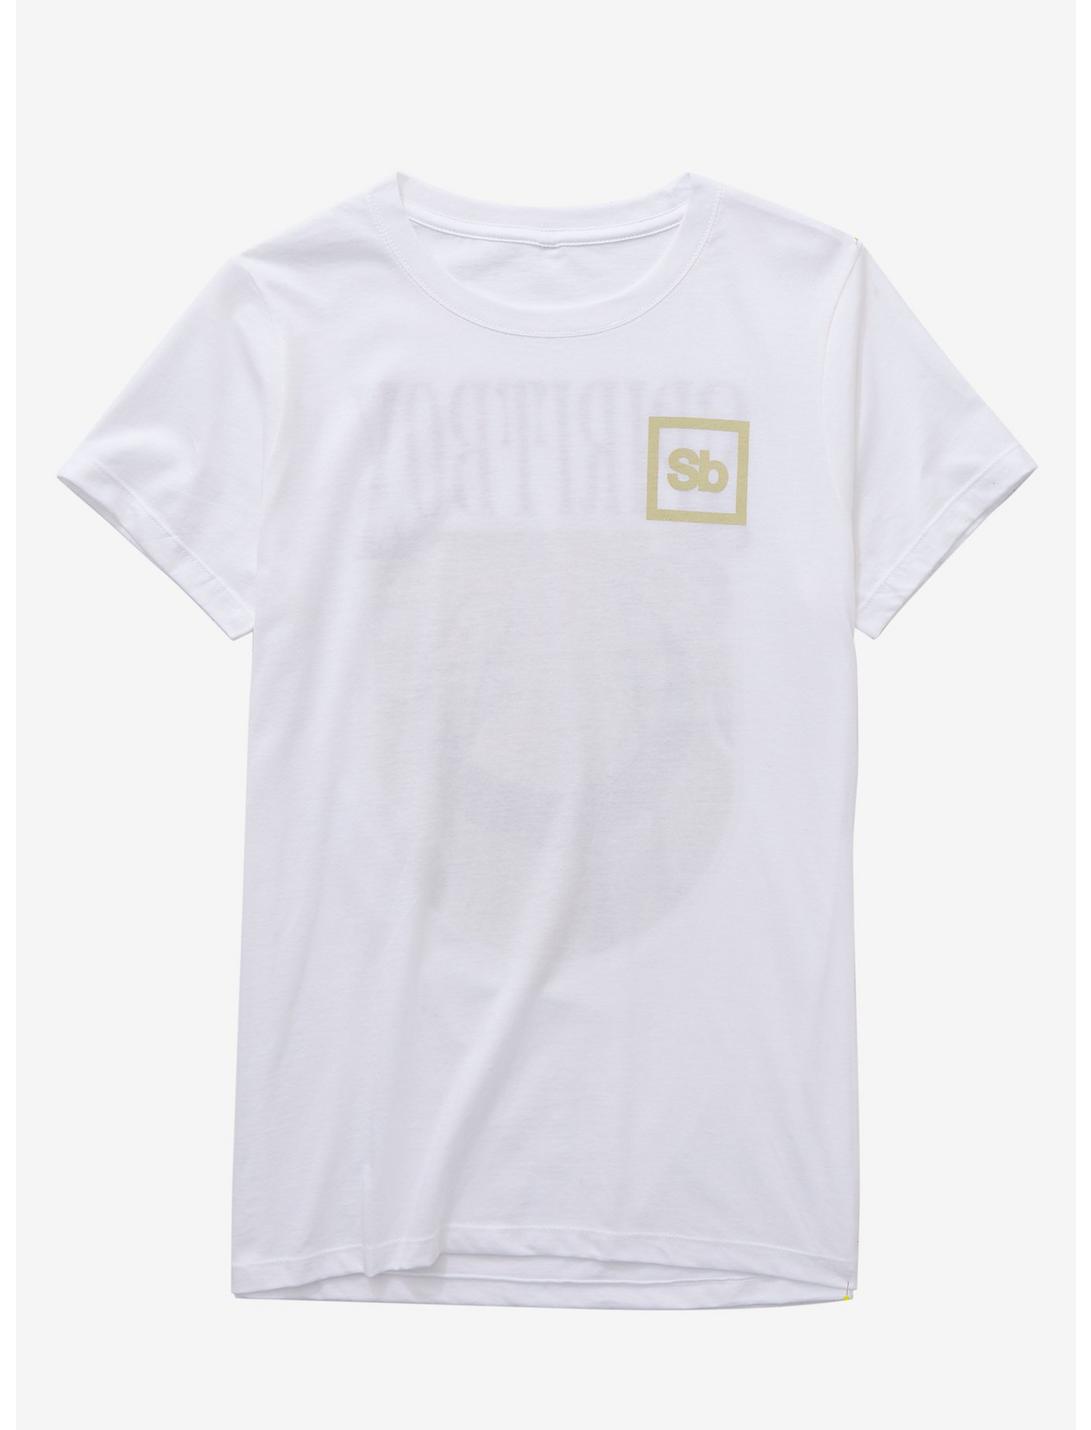 Spiritbox Crescent Moon Girls T-Shirt, BRIGHT WHITE, hi-res